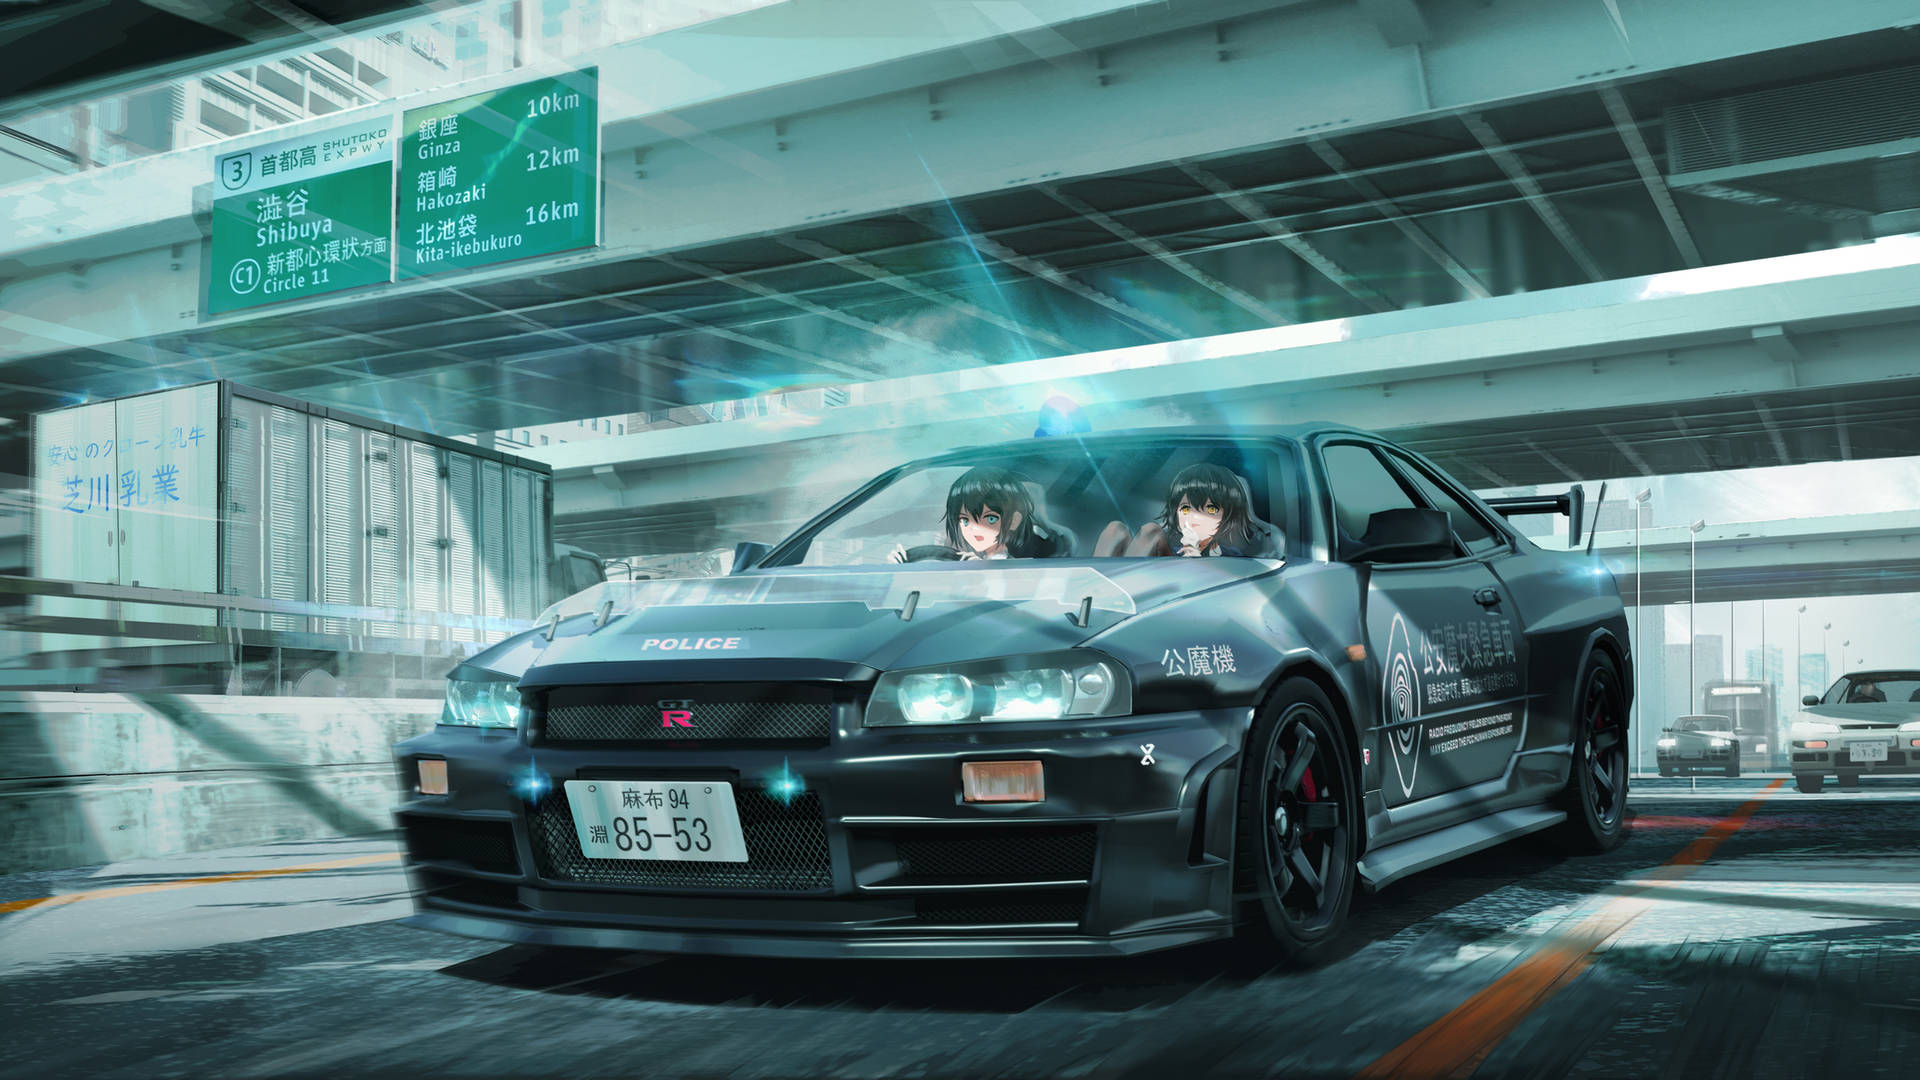 Girls Sitting Inside A Car Anime Wallpaper